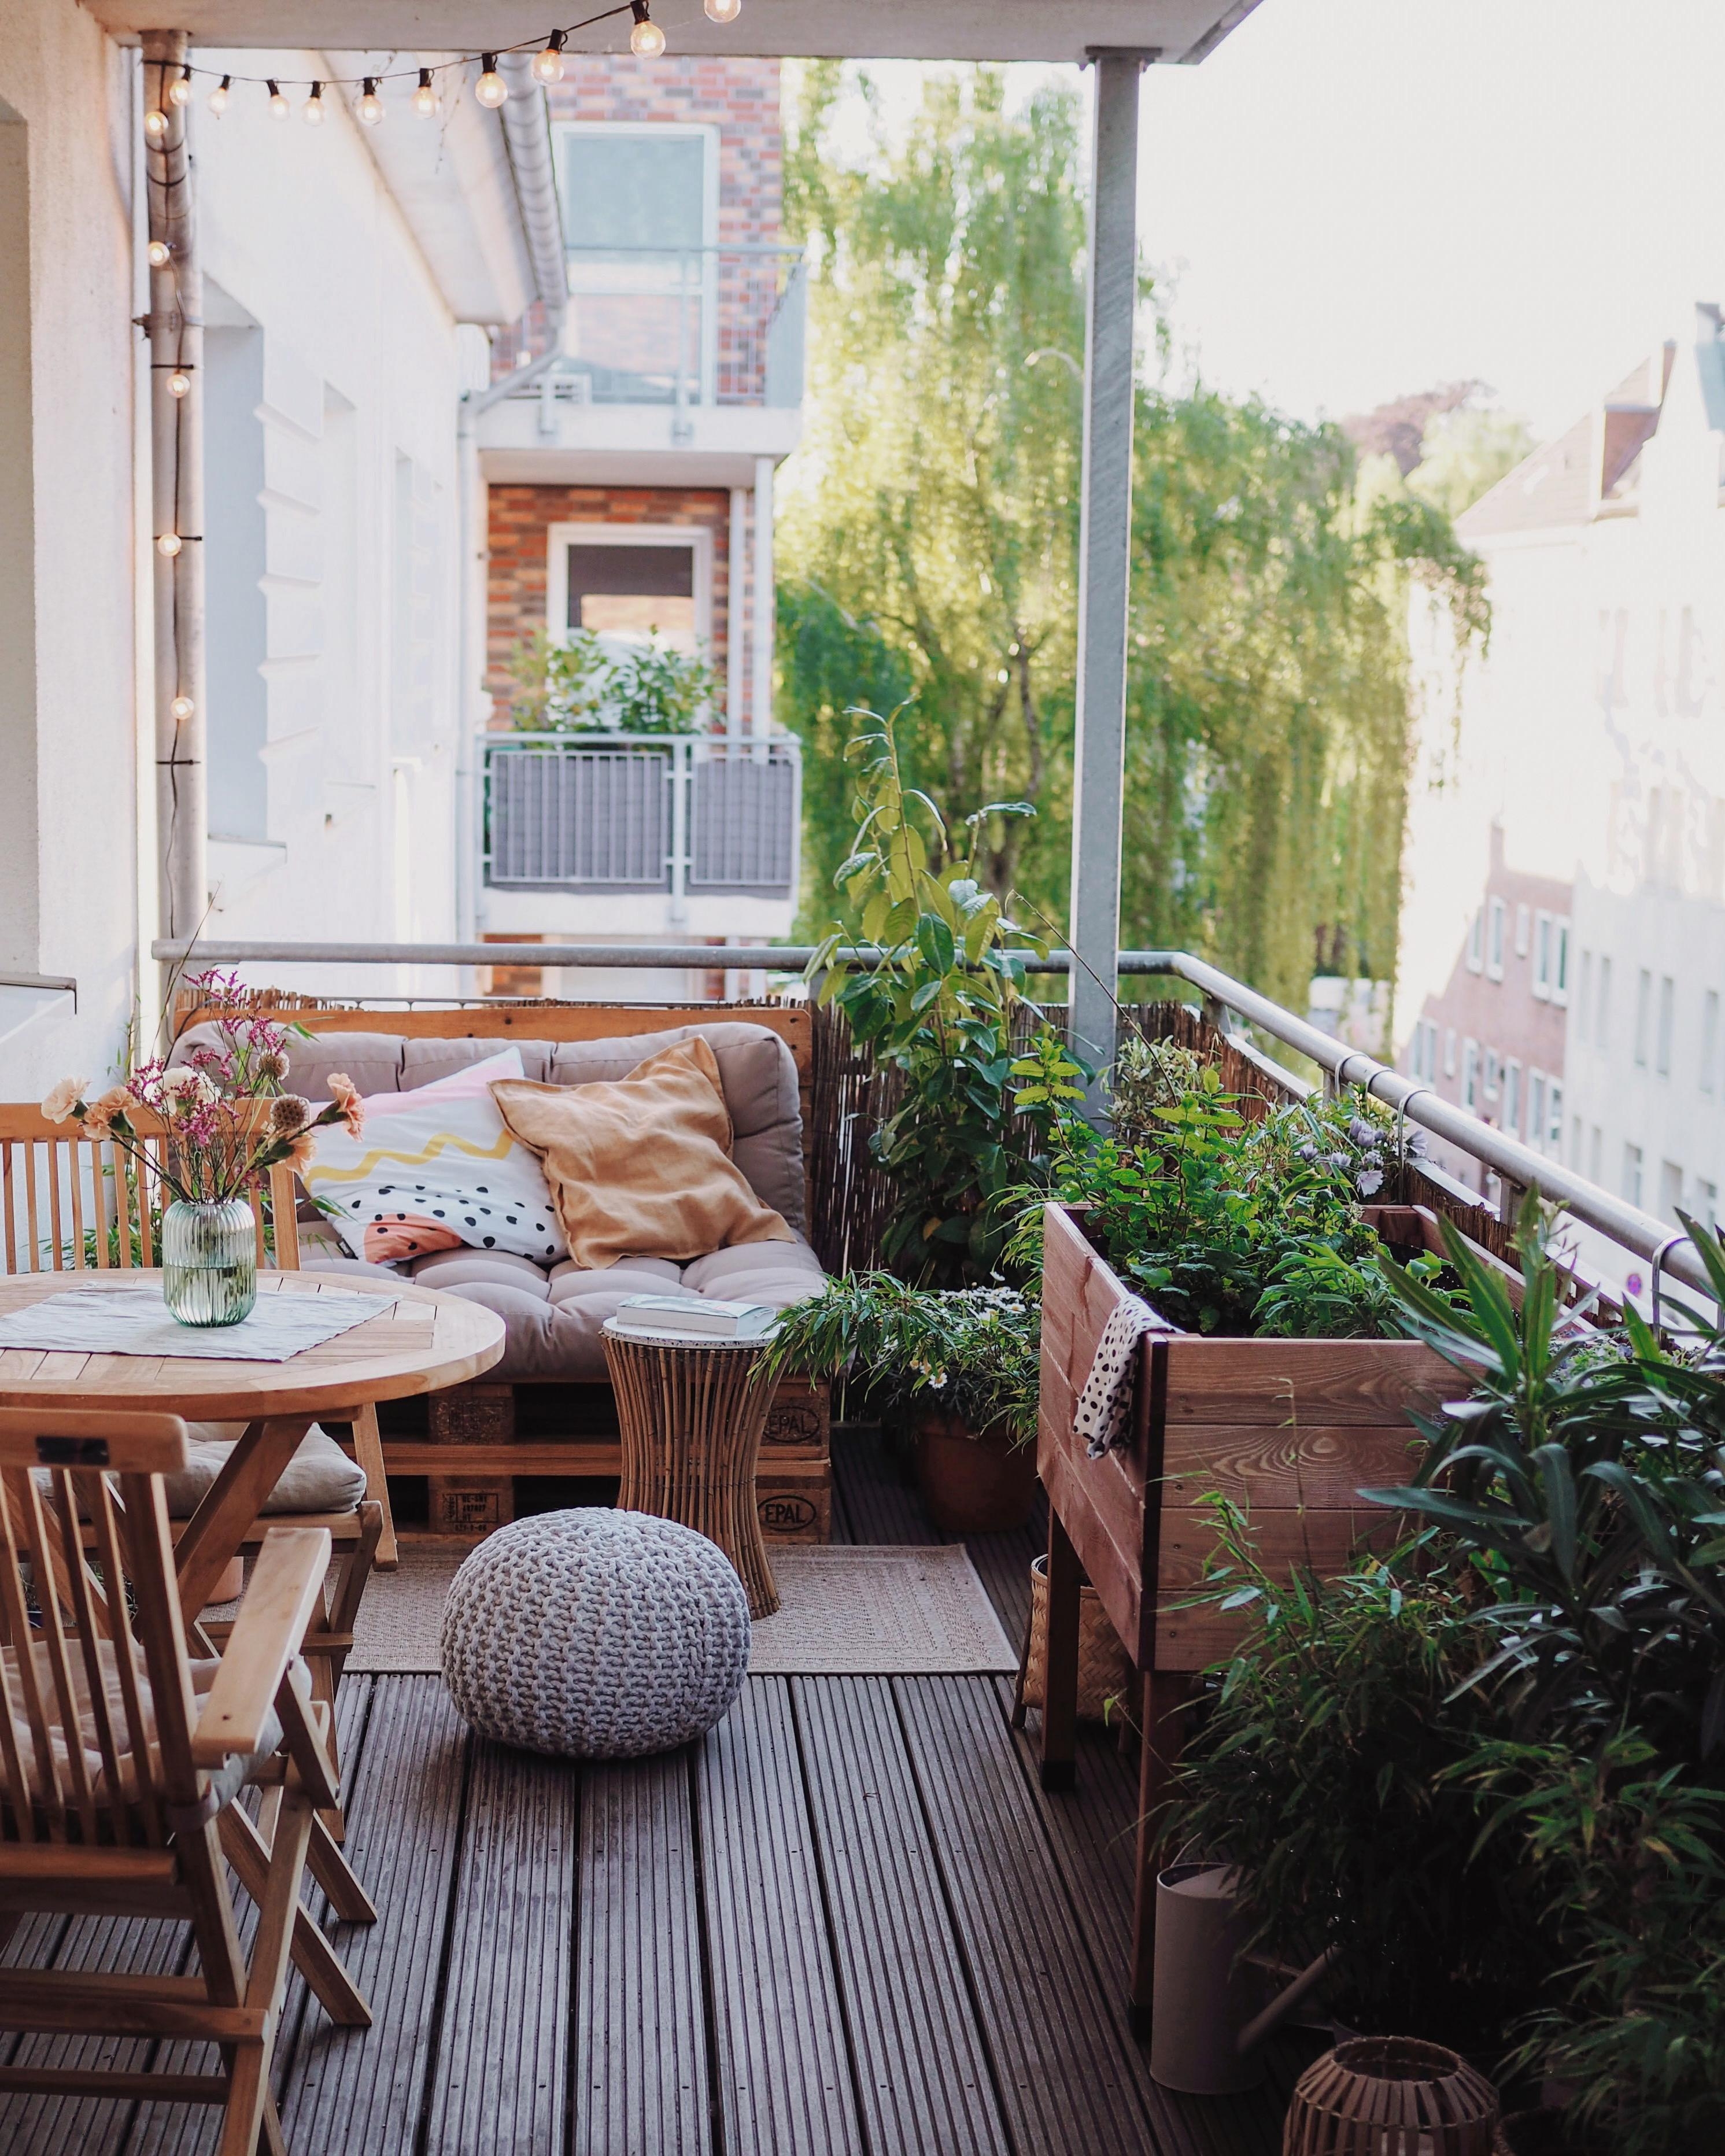 🪴🌞 
#balkonideen #couchstyle #balkon #palettenmöbel #outdoor #hochbeet